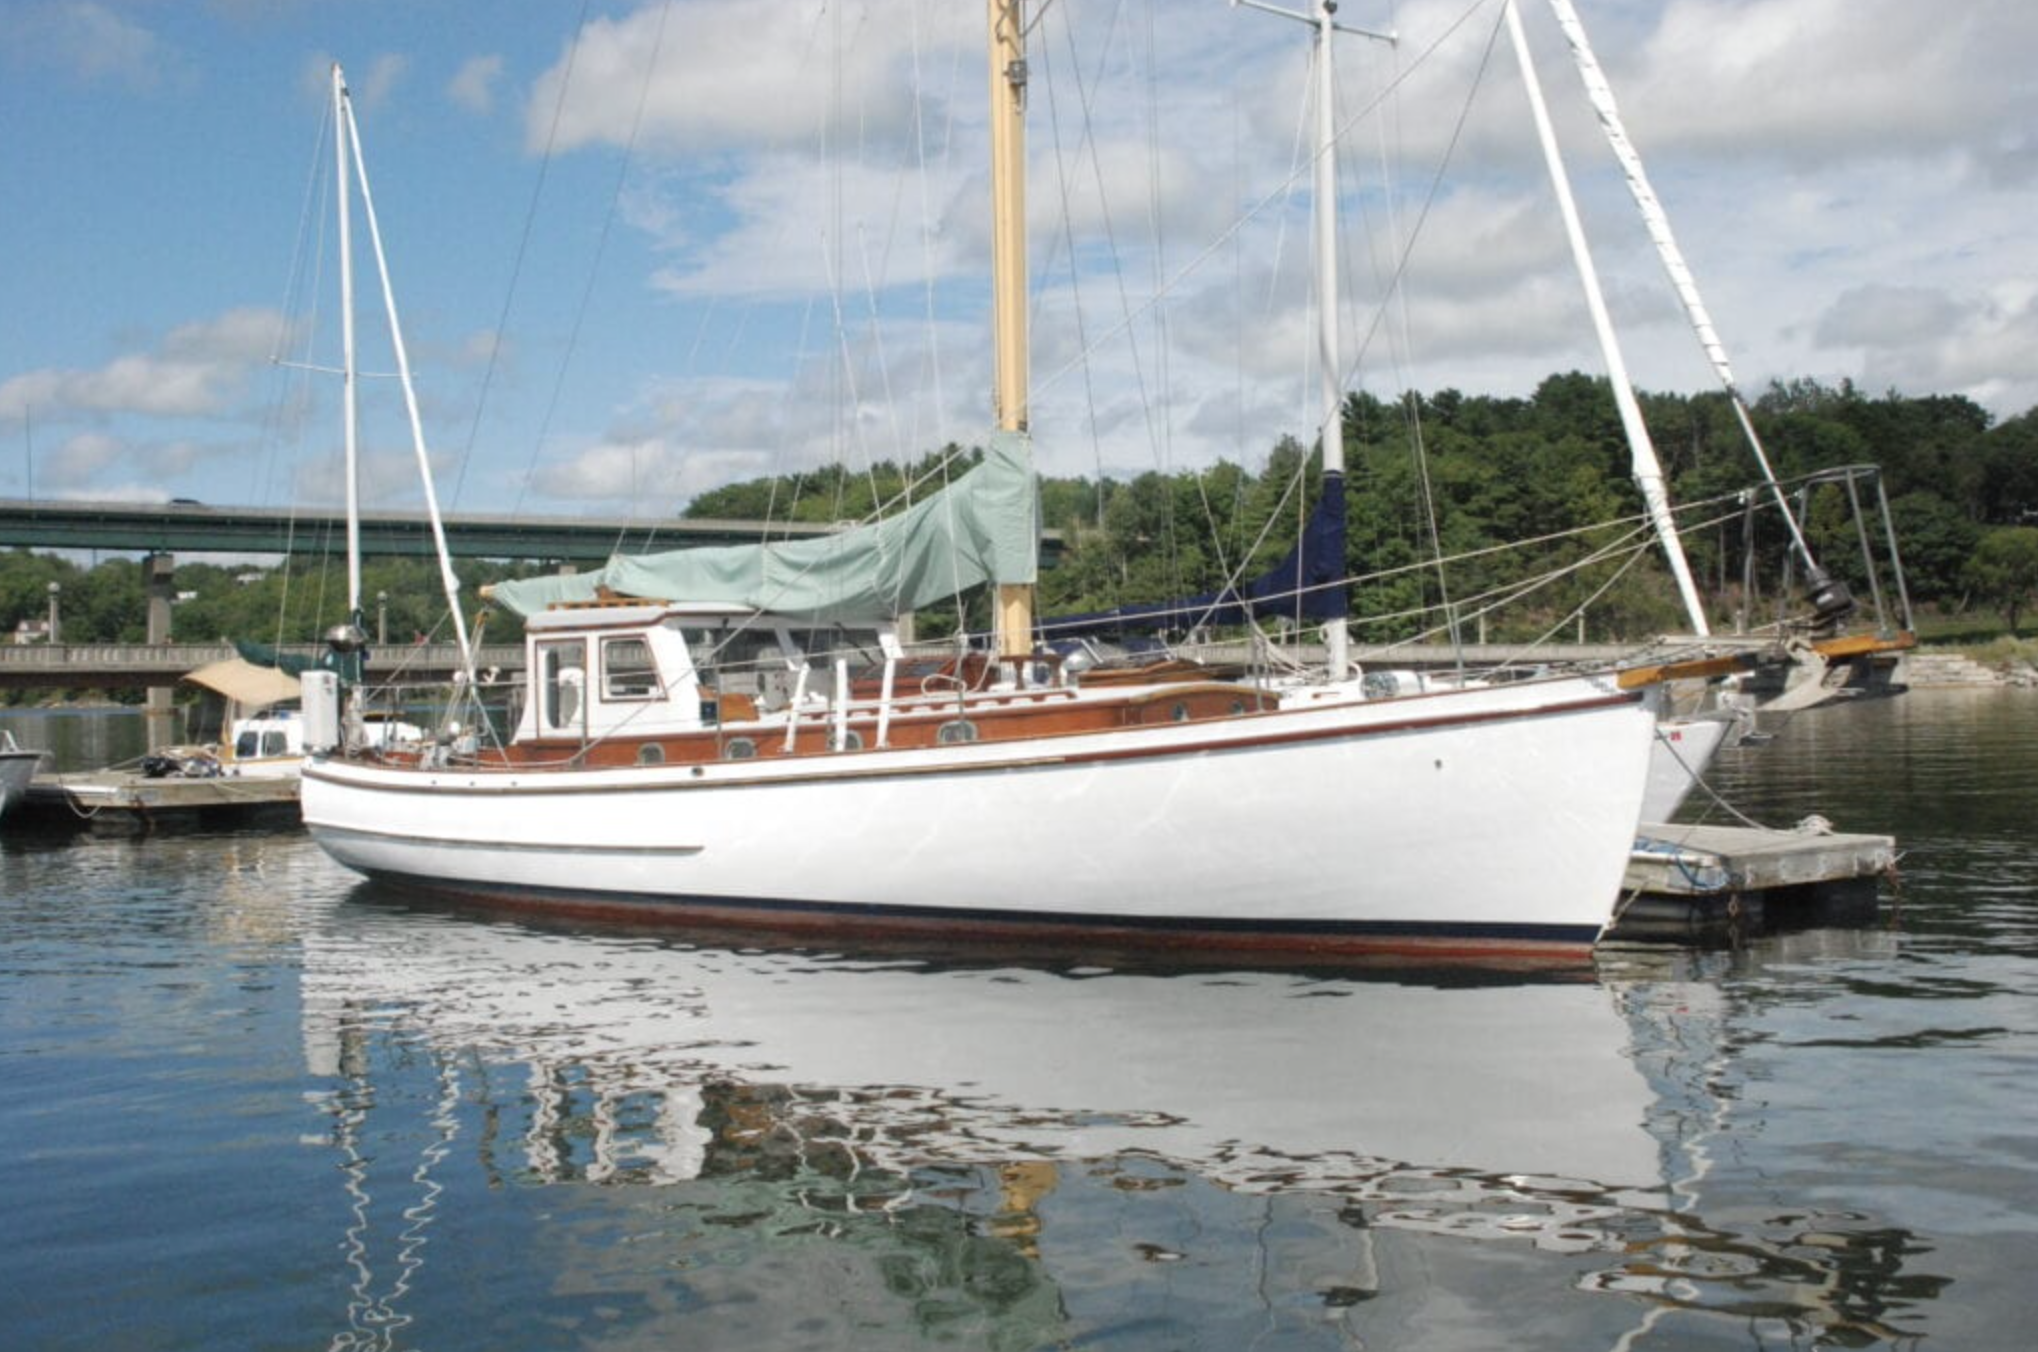 1938 Concordia Motorsailor. Asking $128,500. (Brokerage: Artist boat works. Yacht is in Belfast, Maine.) More information: 